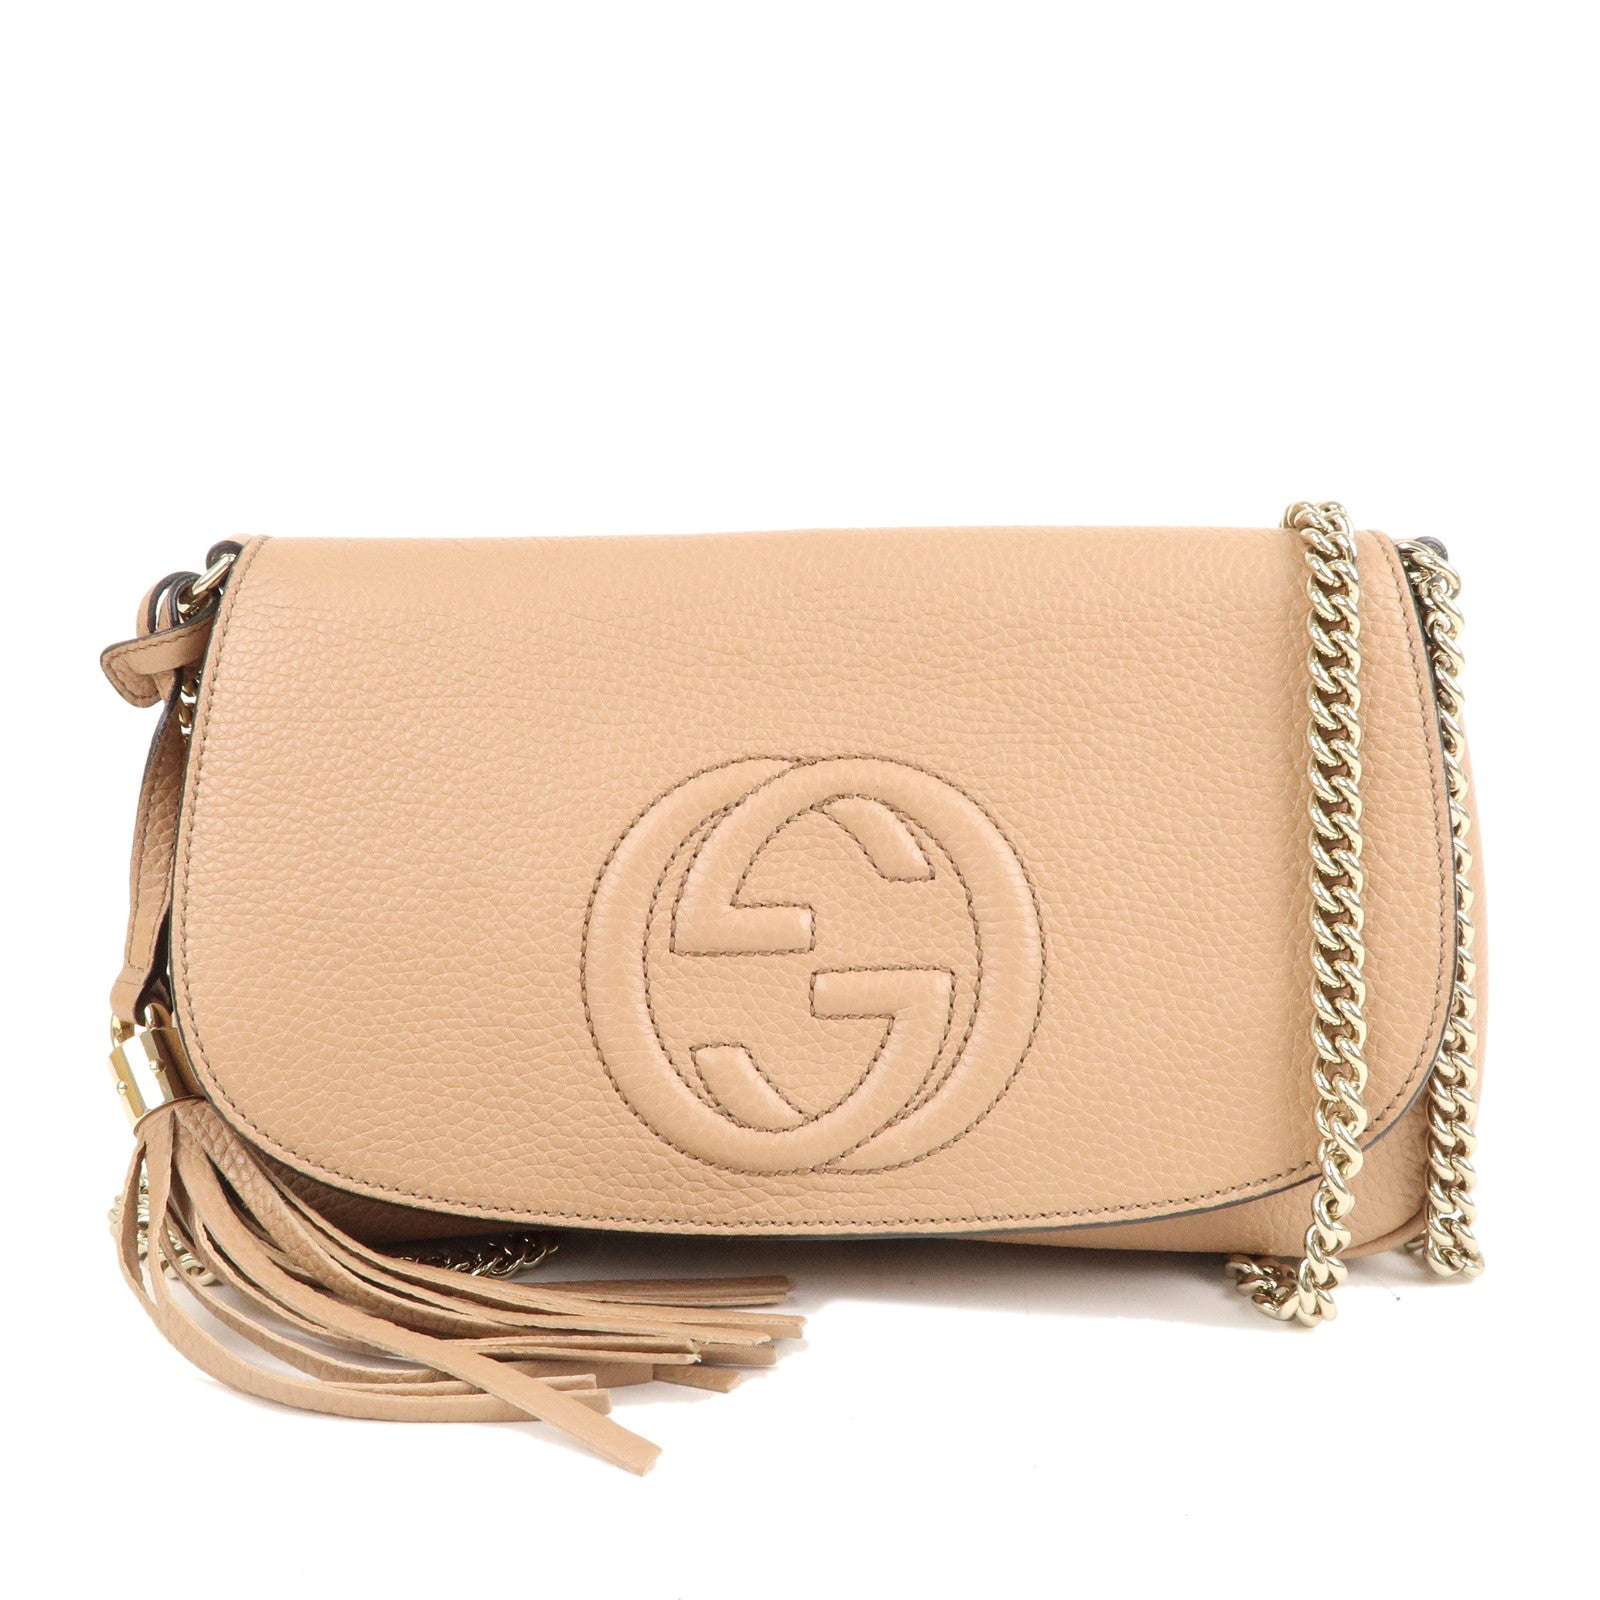 Gucci Beige Leather Small Soho Women's Crossbody Bag 536224 A7M0G 2754